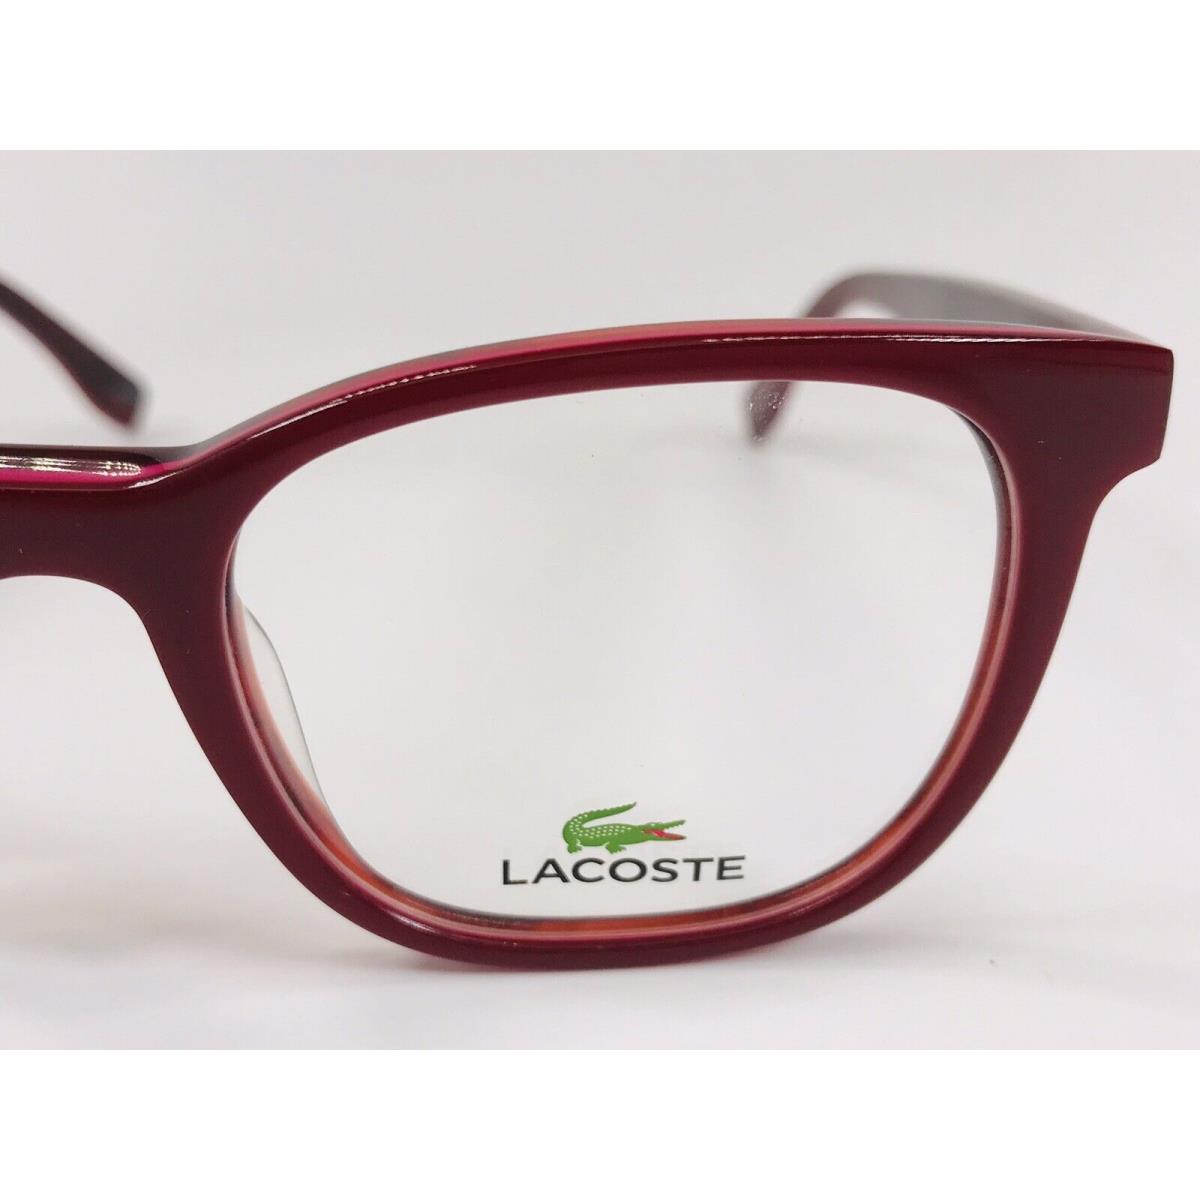 Lacoste eyeglasses  - 615 , Red Frame 6